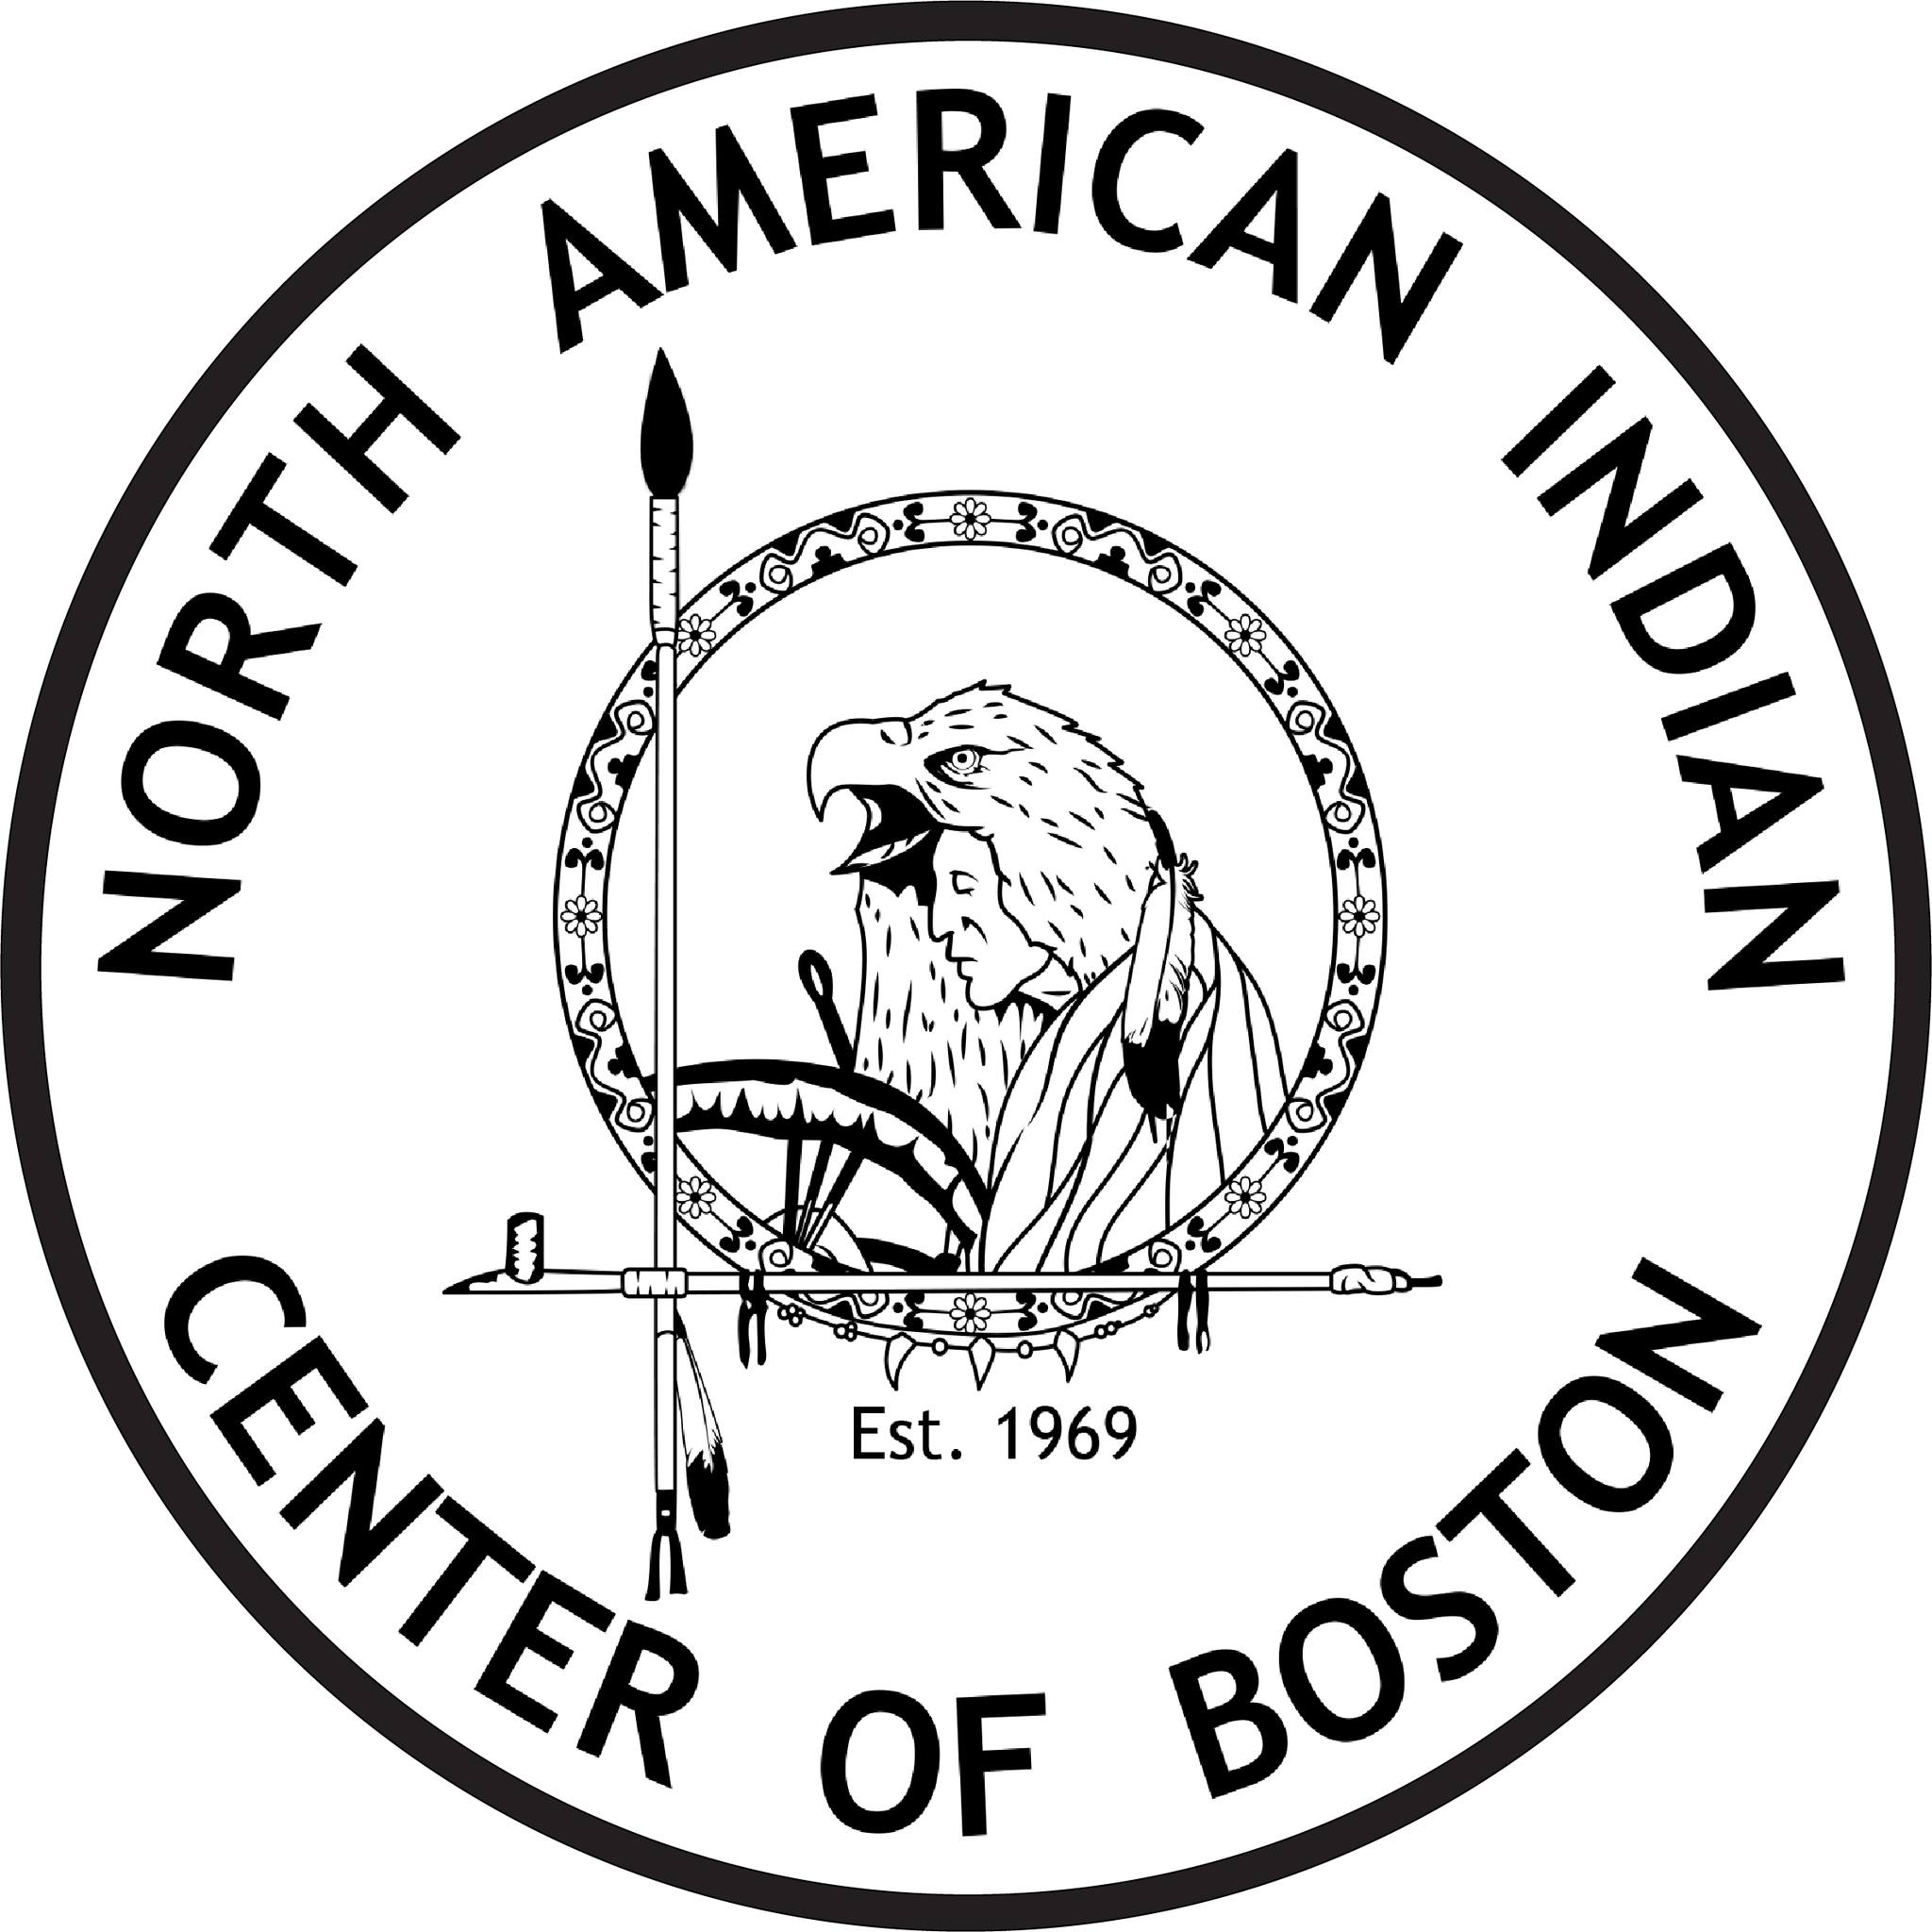 Native American Organizations in USA - North American Indian Center of Boston